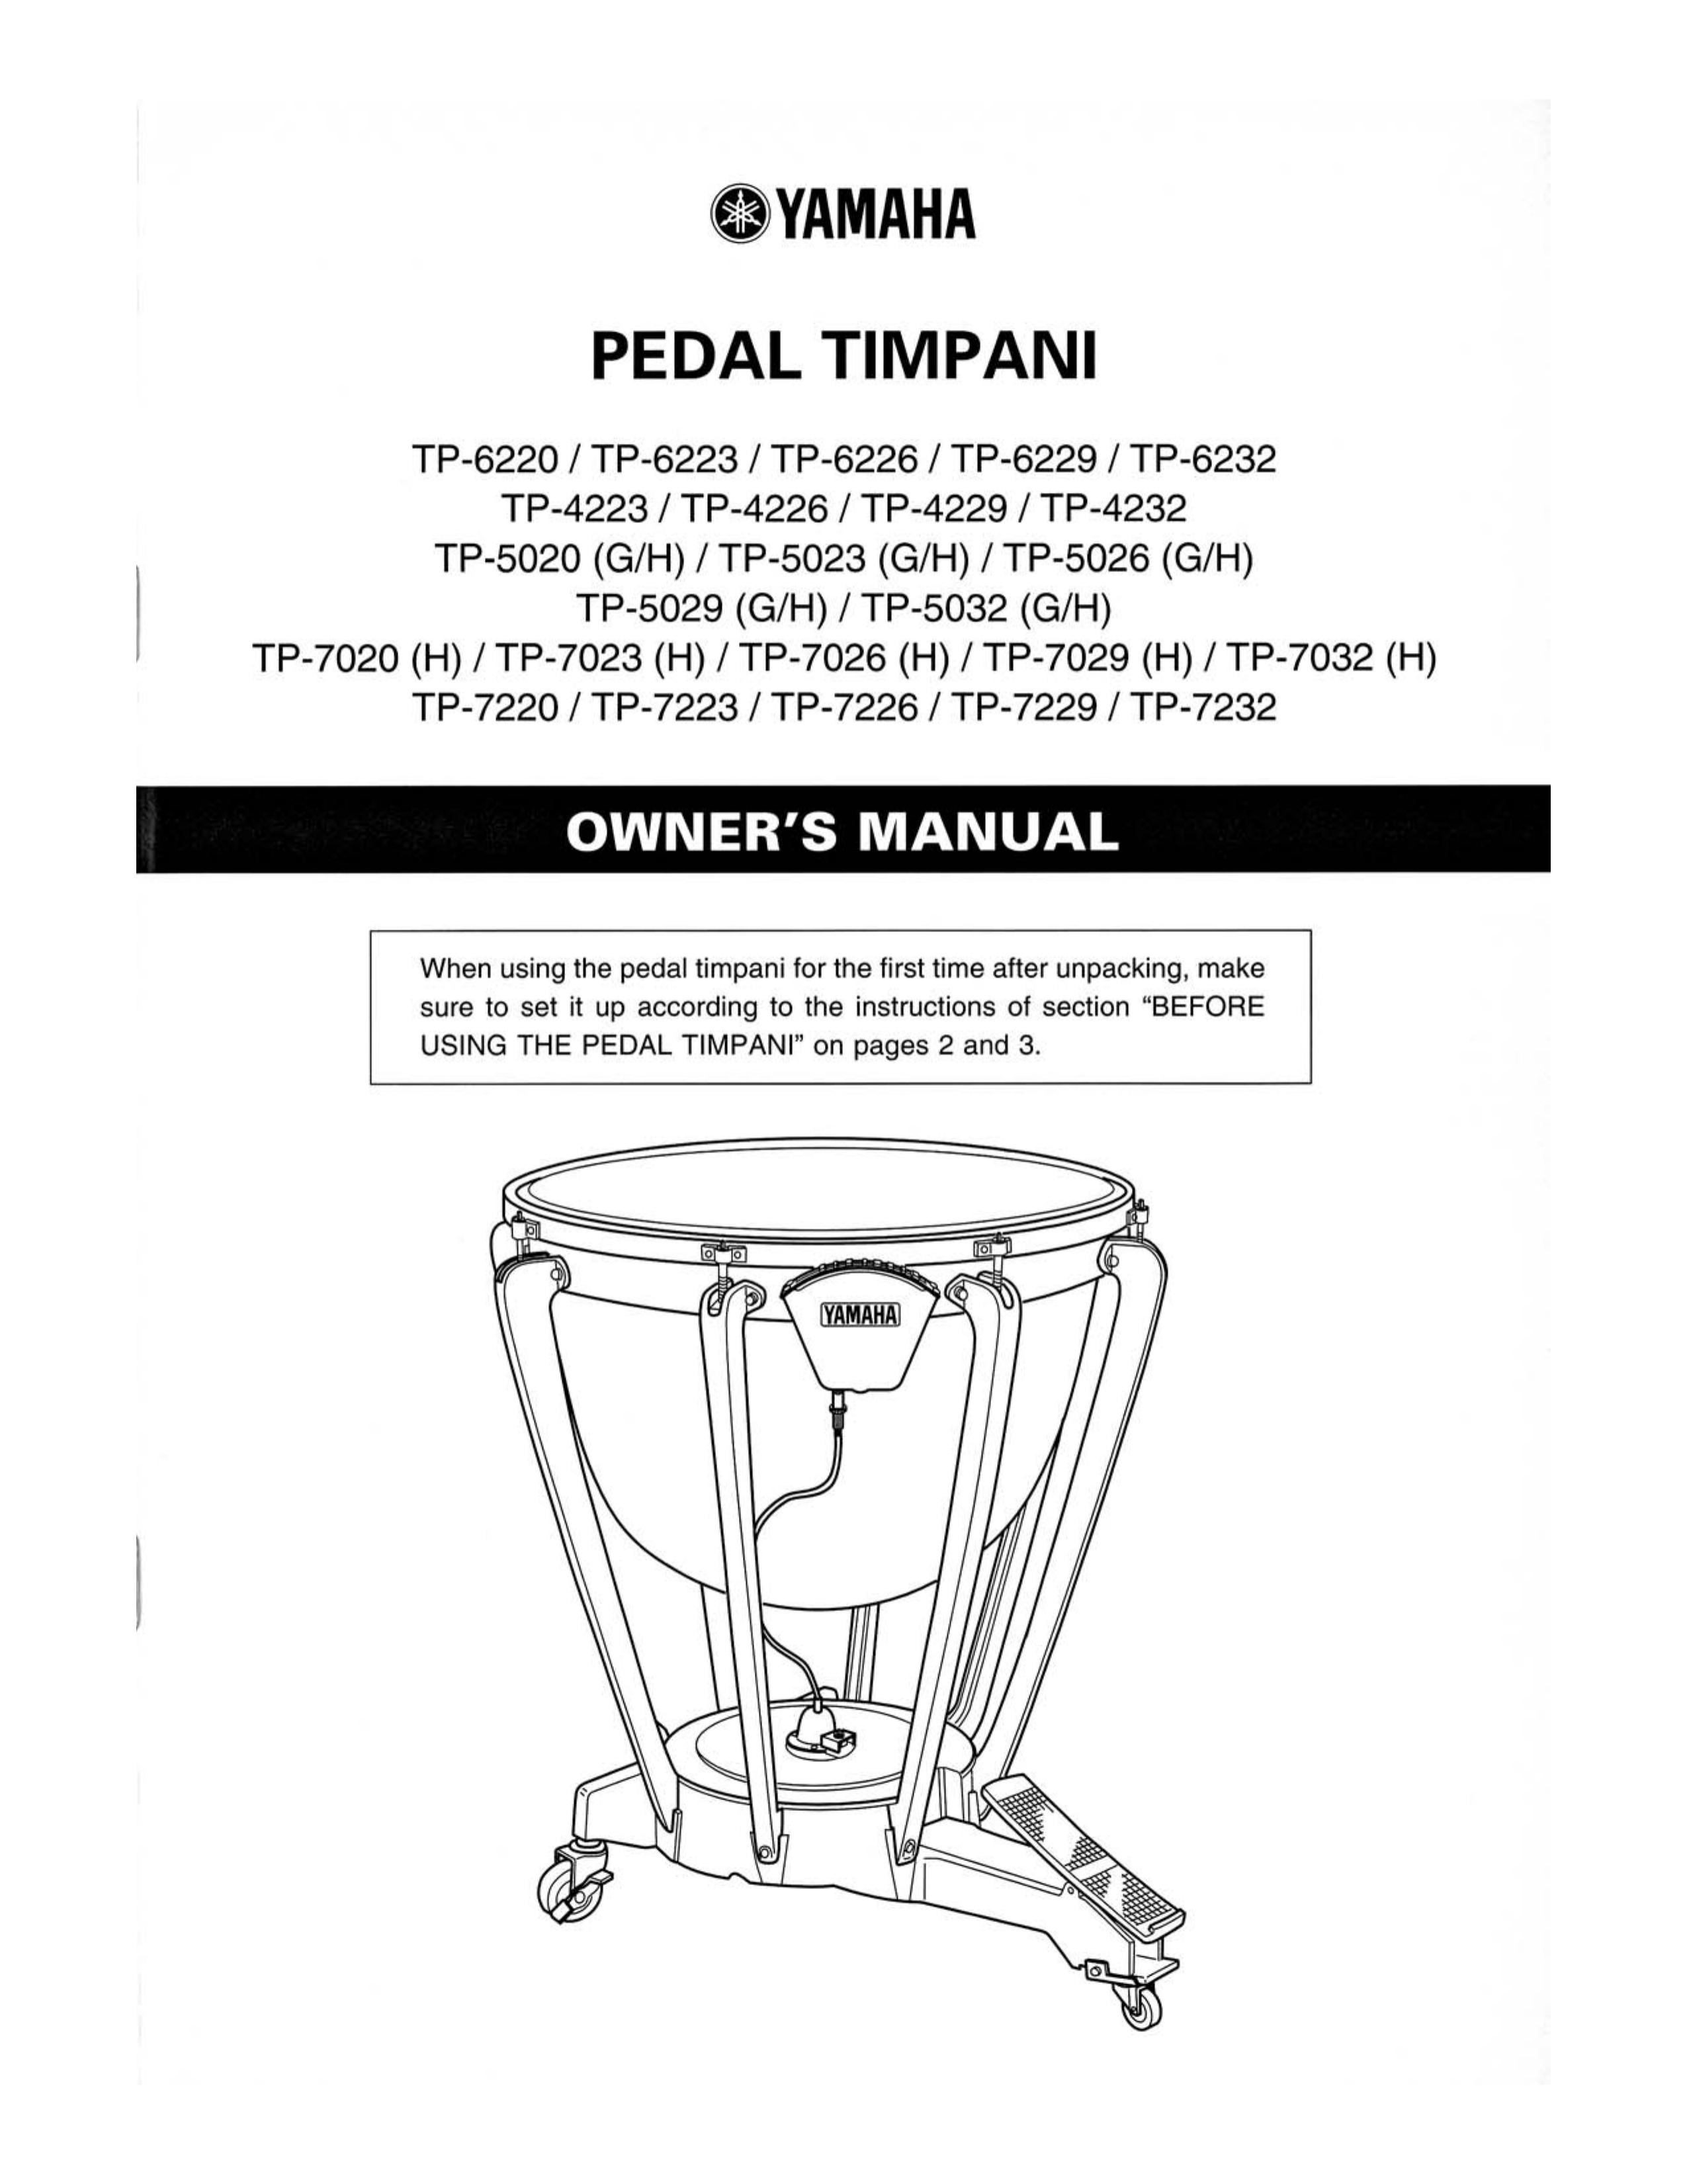 Yamaha TP-4232 Music Pedal User Manual